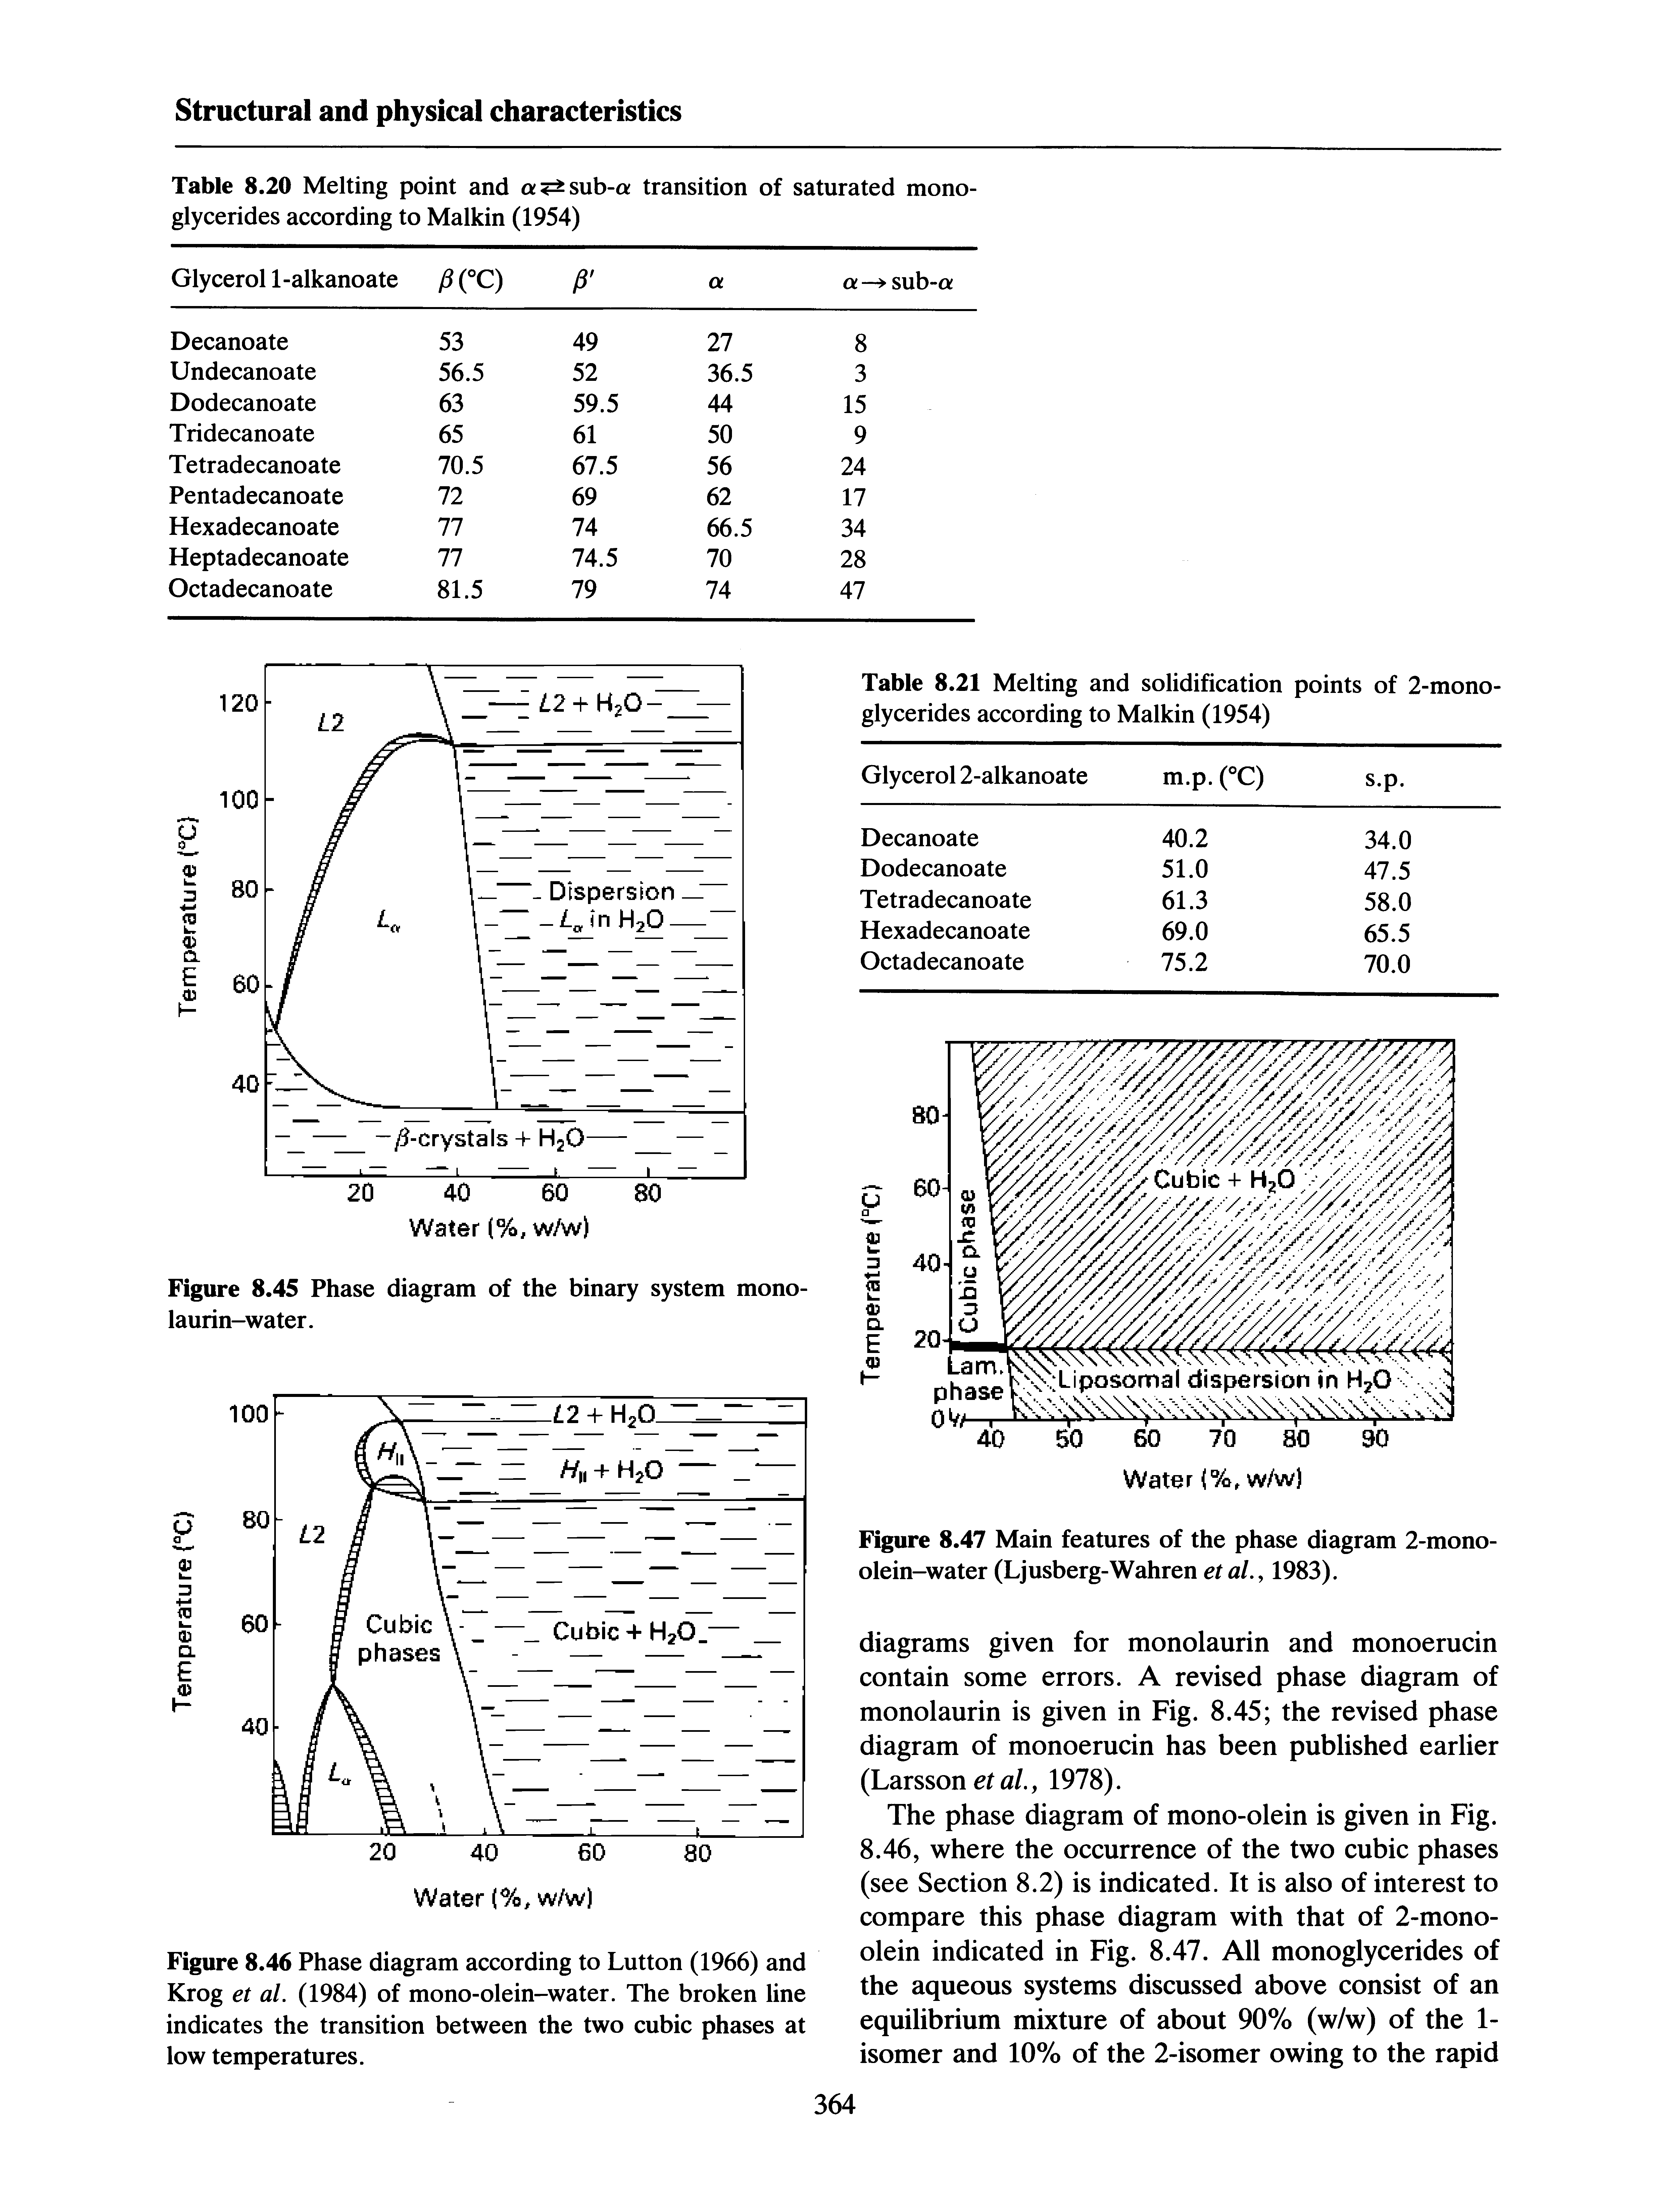 Figure 8.47 Main features of the phase diagram 2-mono-olein-water (Ljusberg-Wahren etaL, 1983).